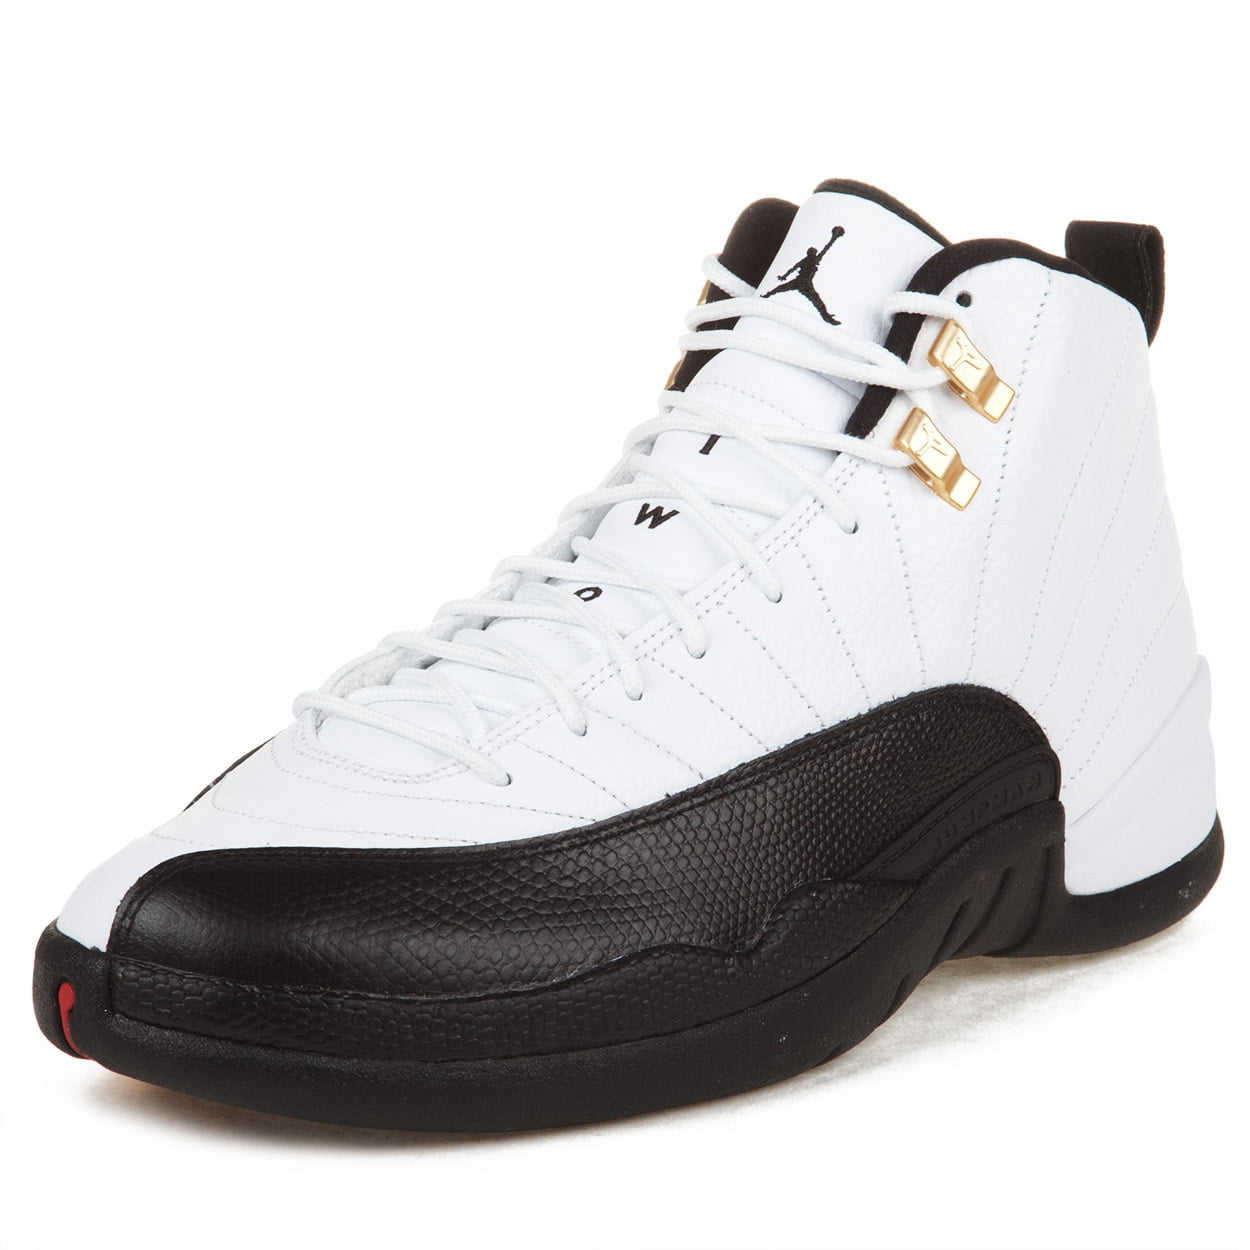 Nike Mens Air Jordan 12 Retro "Taxi" White/Black-Varsity Red 130690-125